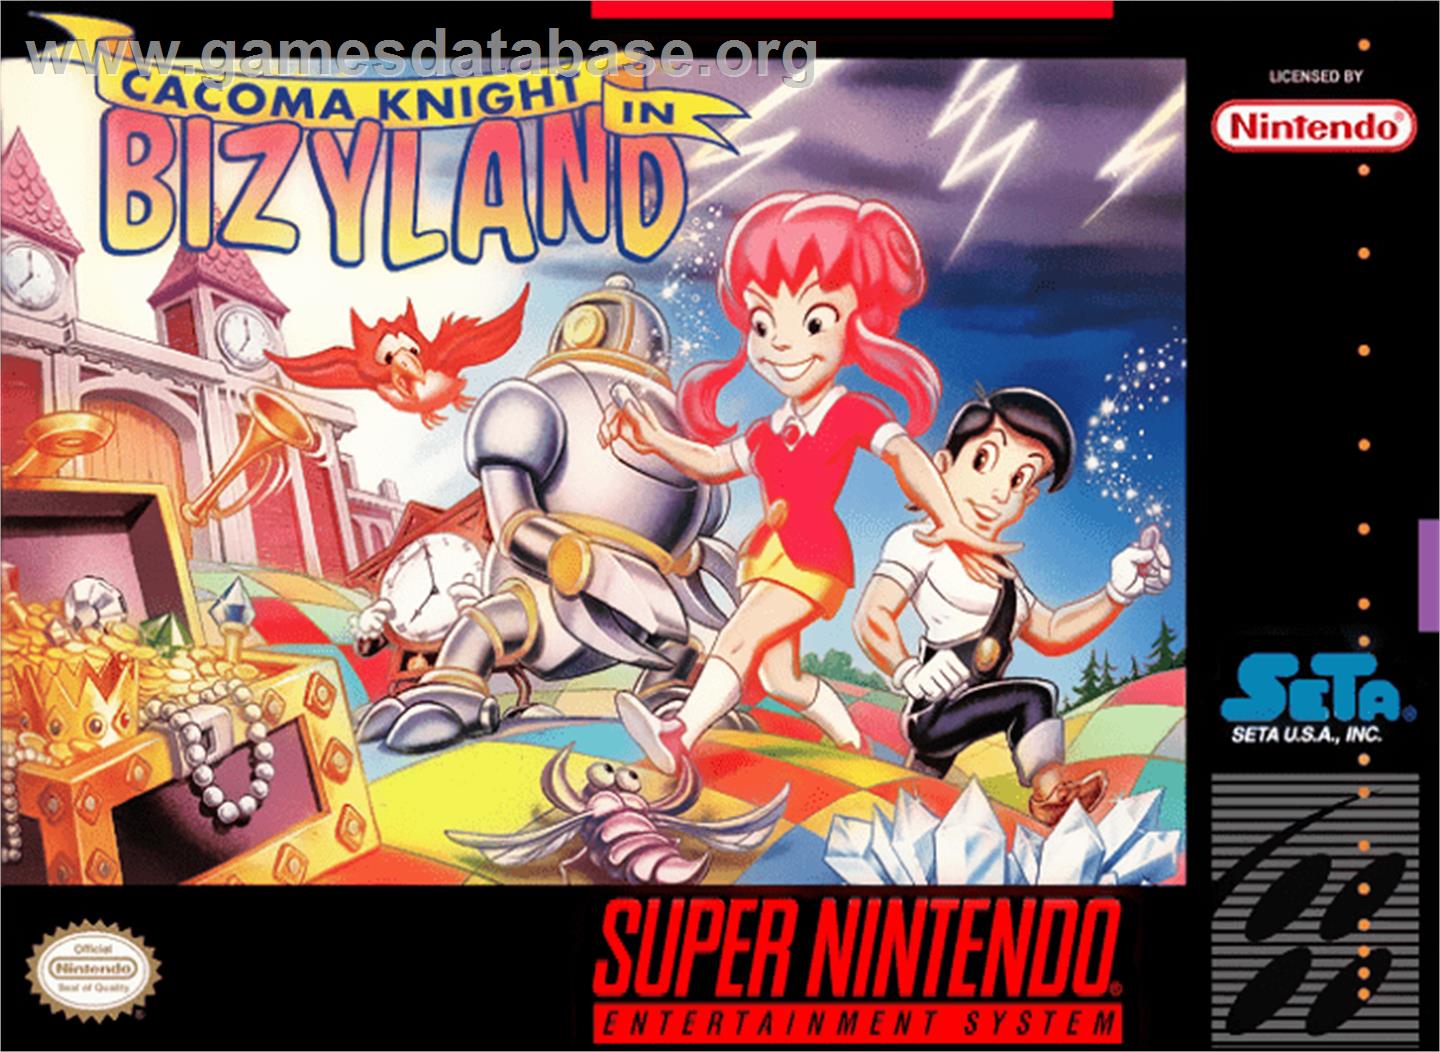 Cacoma Knight in Bizyland - Nintendo SNES - Artwork - Box